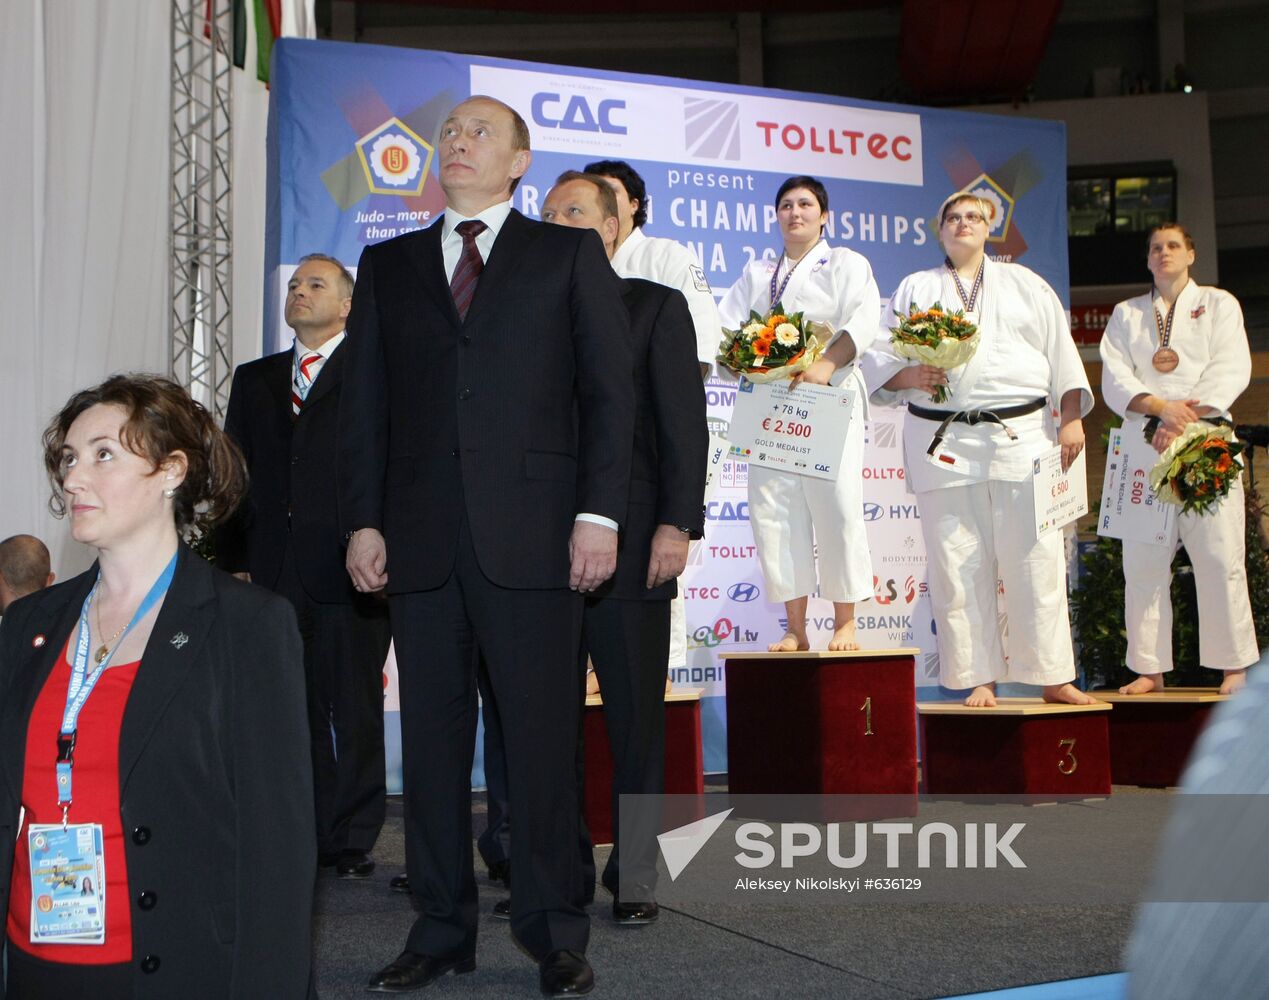 Russian fans at European Judo Championship in Vienna